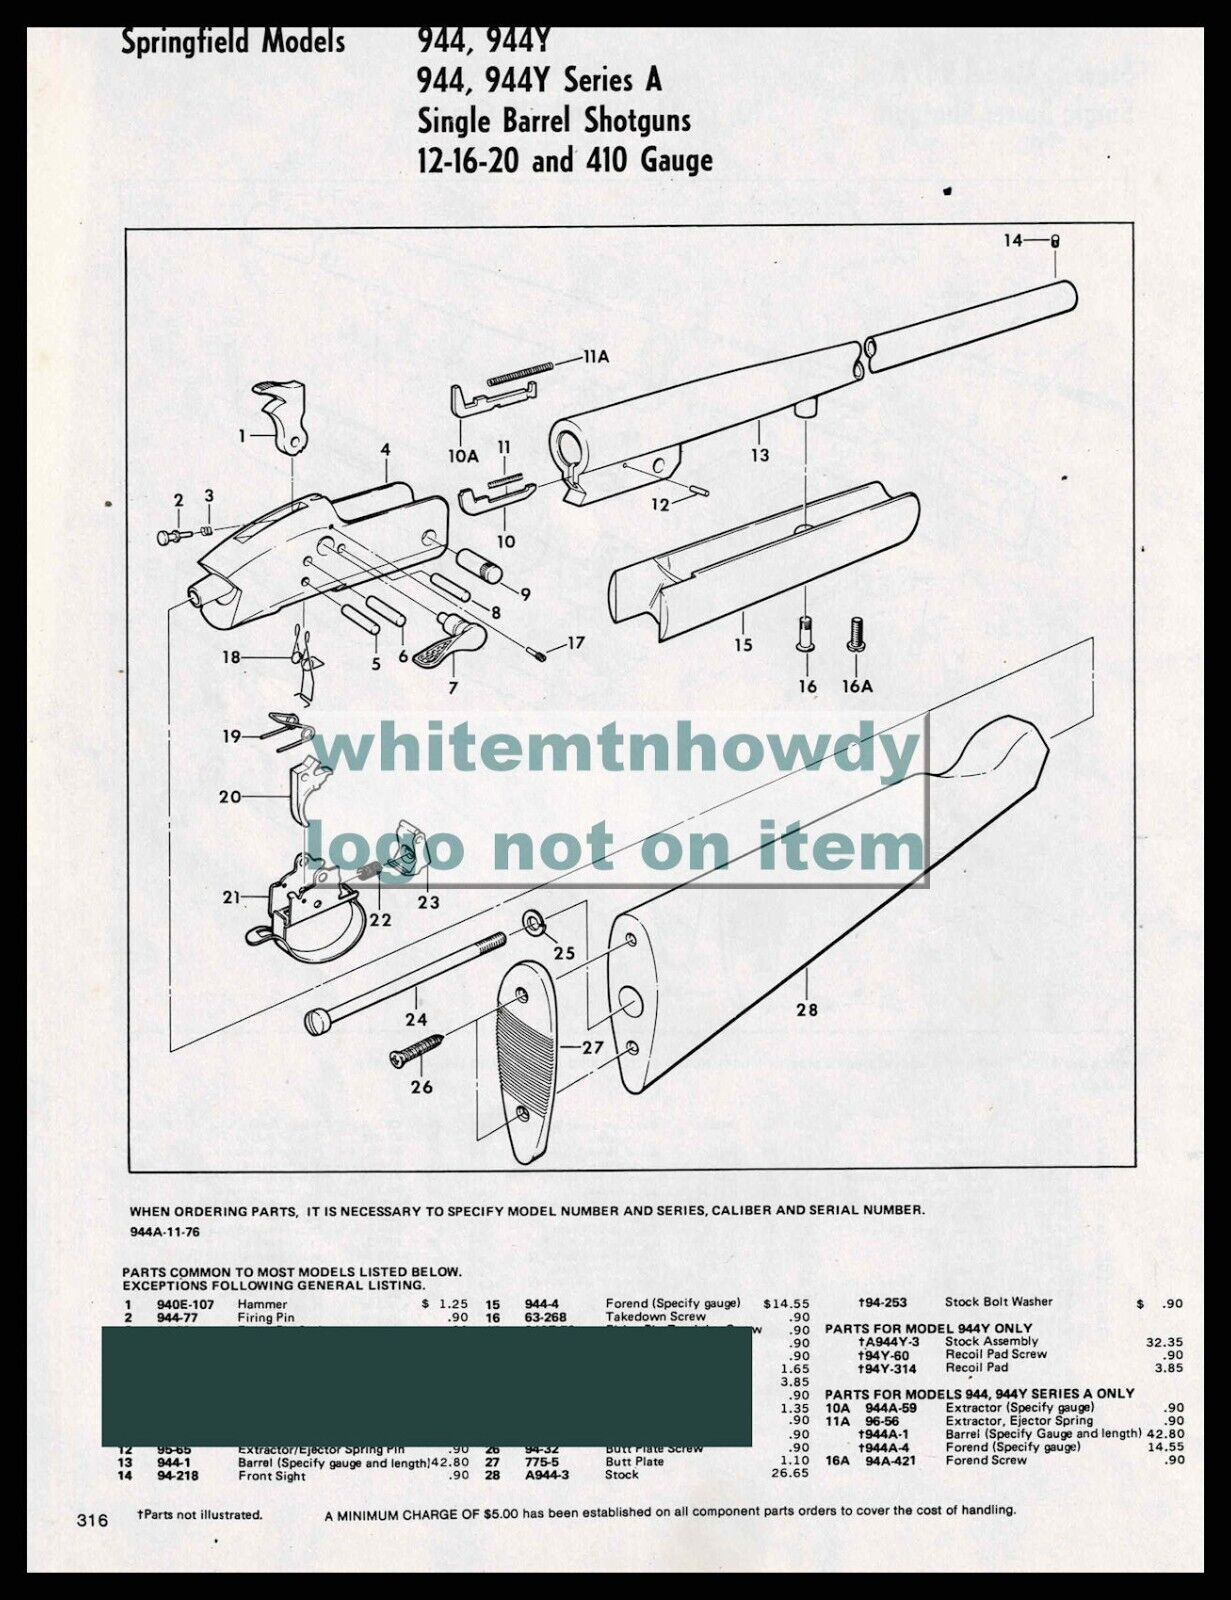 1984 SPRINGFIELD 944, 944Y & 944 944Y Series A Shotgun  Schematic Parts List